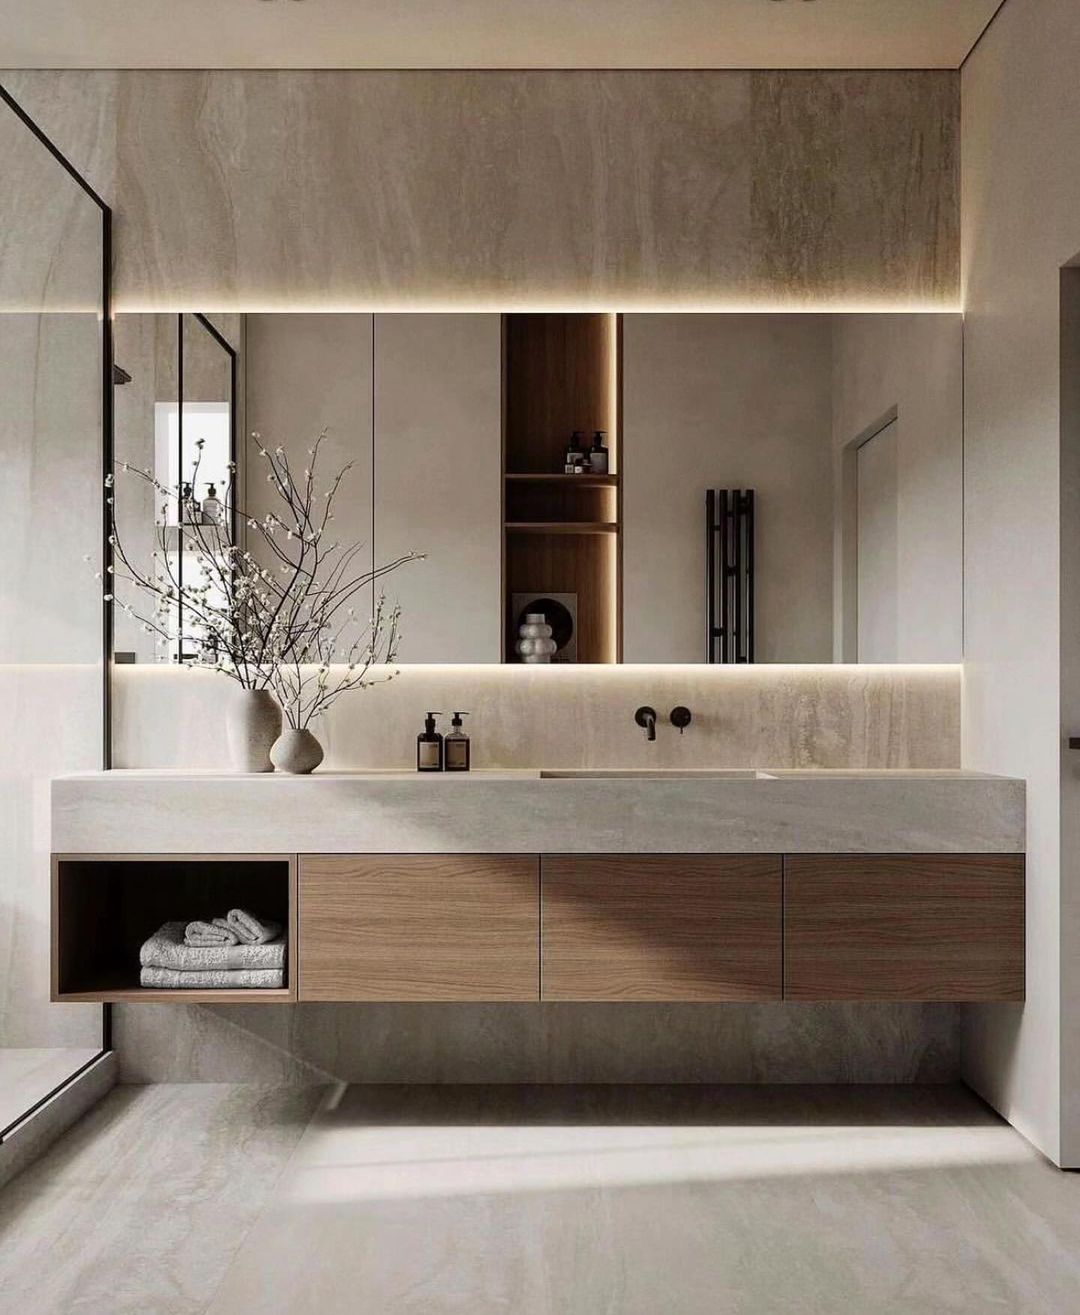 Bathroom Interior Design Enhance Your Space with Stylish and Functional Bathroom Decor